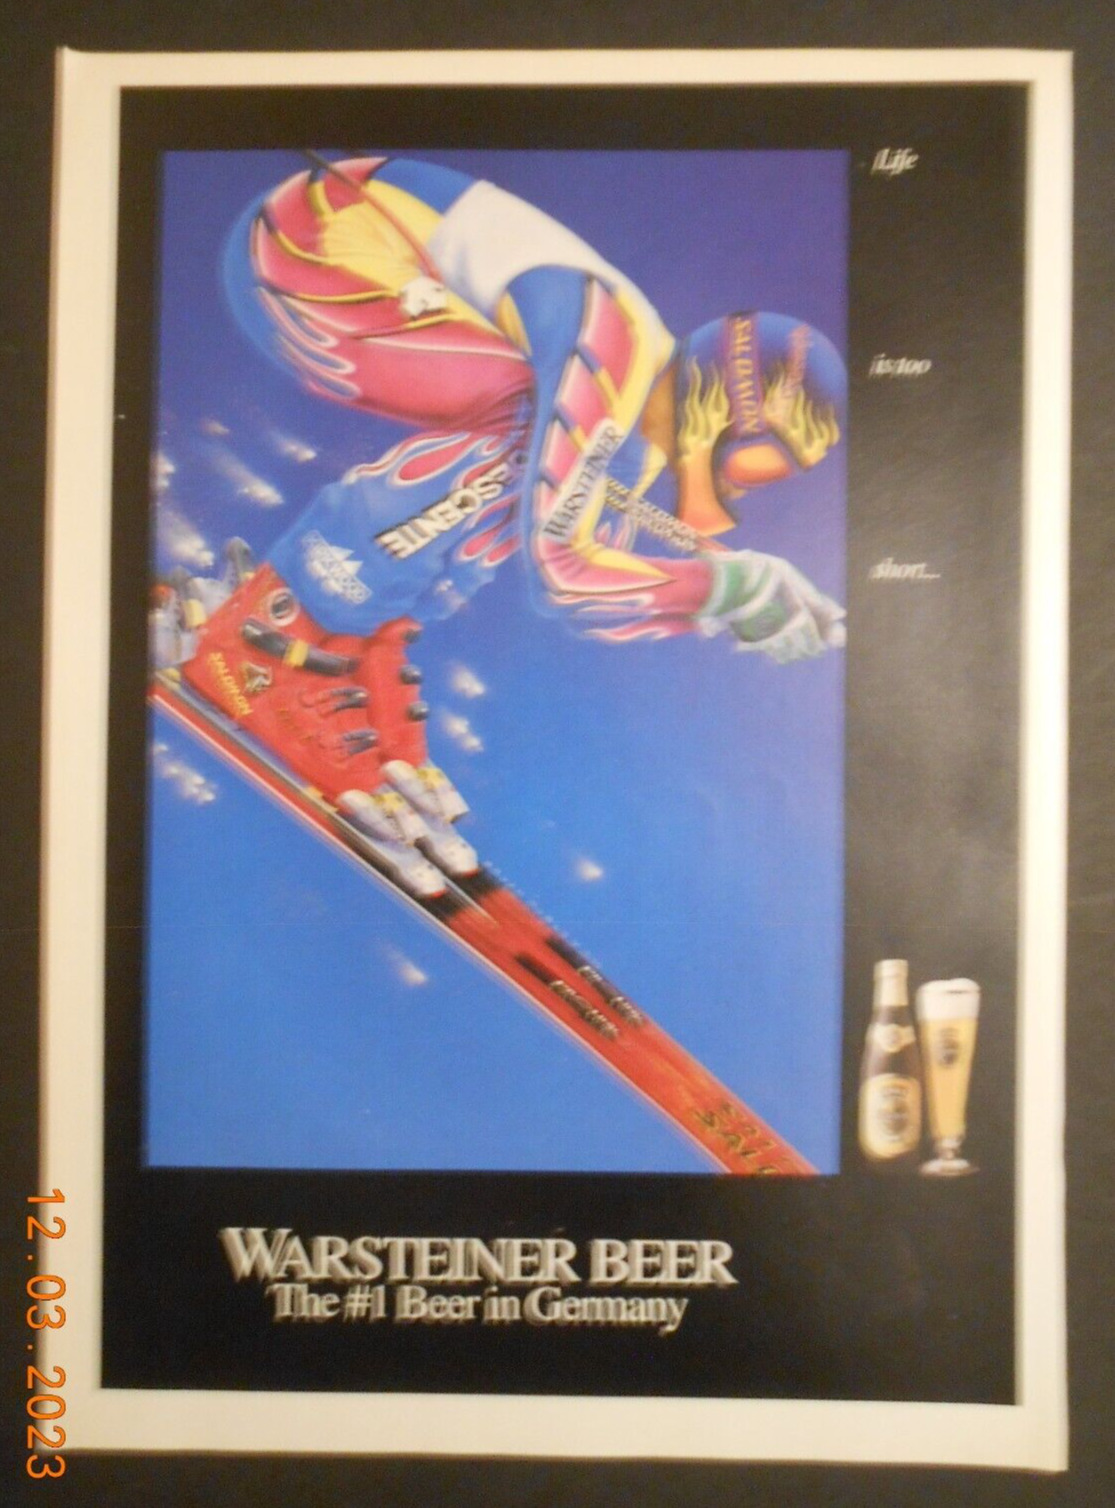 1995 Warsteiner Beer Downhill skiing art AD #1 Beer in Germany Life is too short